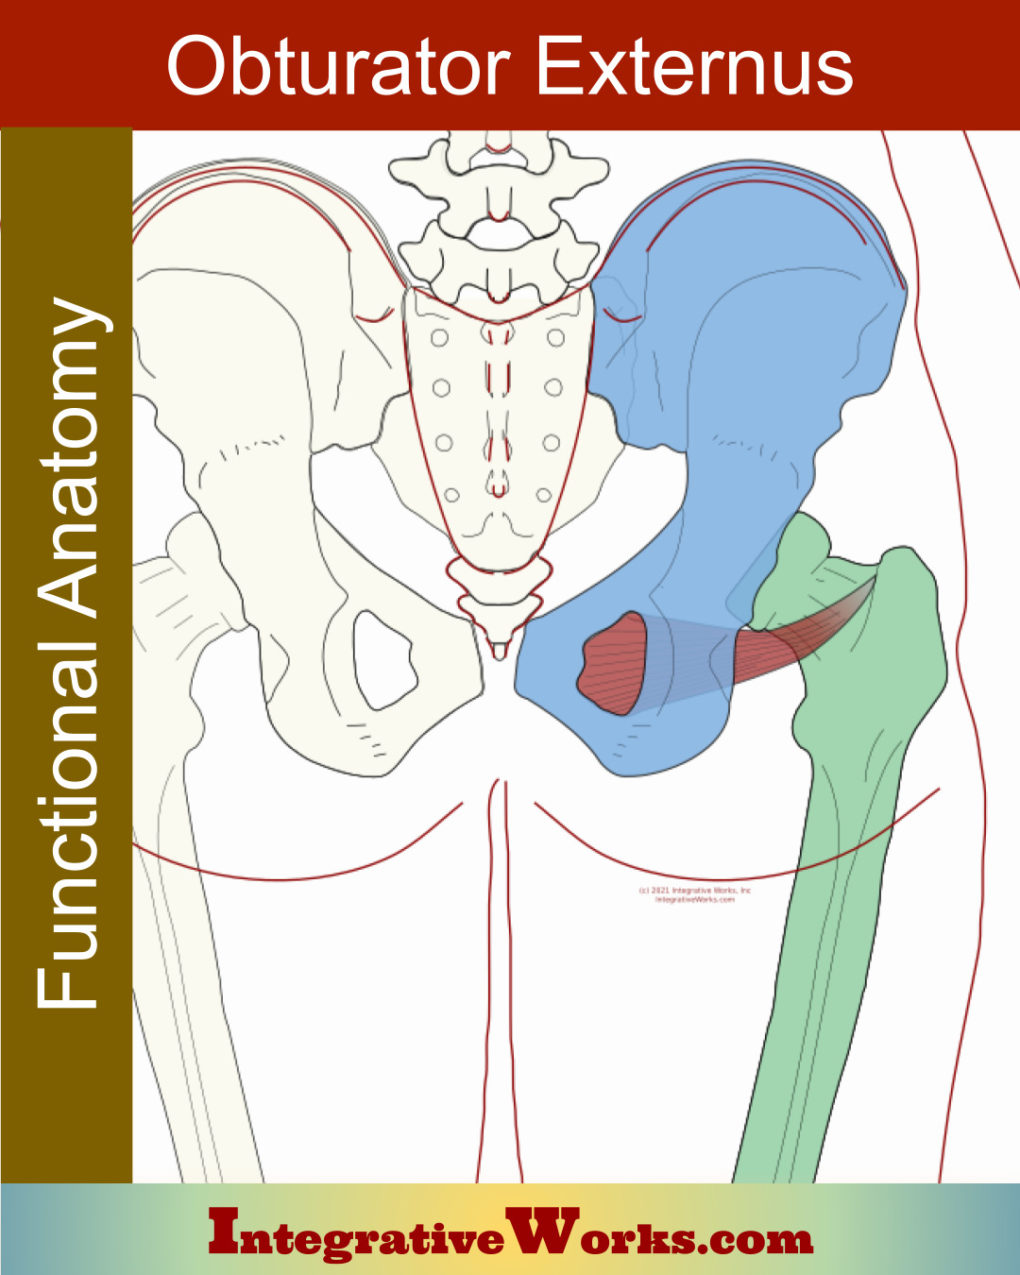 Obturator Externus Functional Anatomy Integrative Works